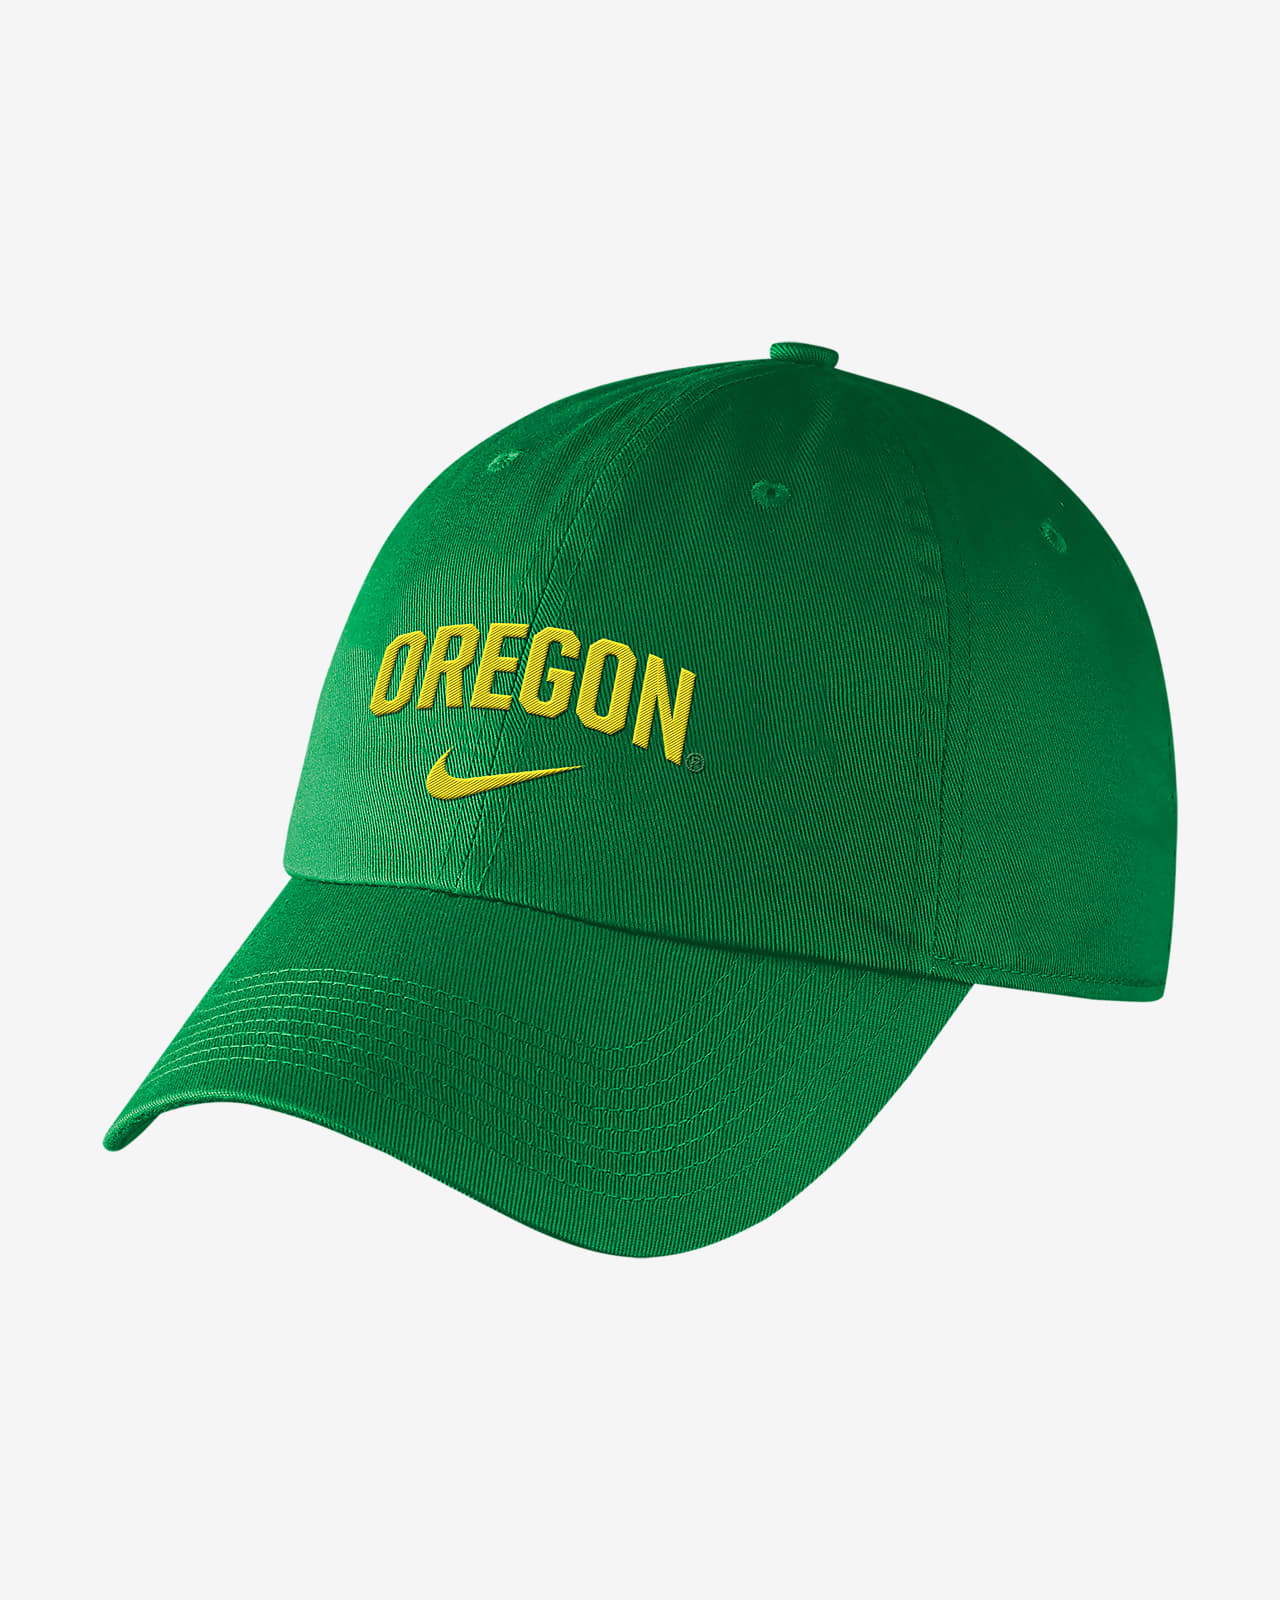 Nike College (Oregon) Hat